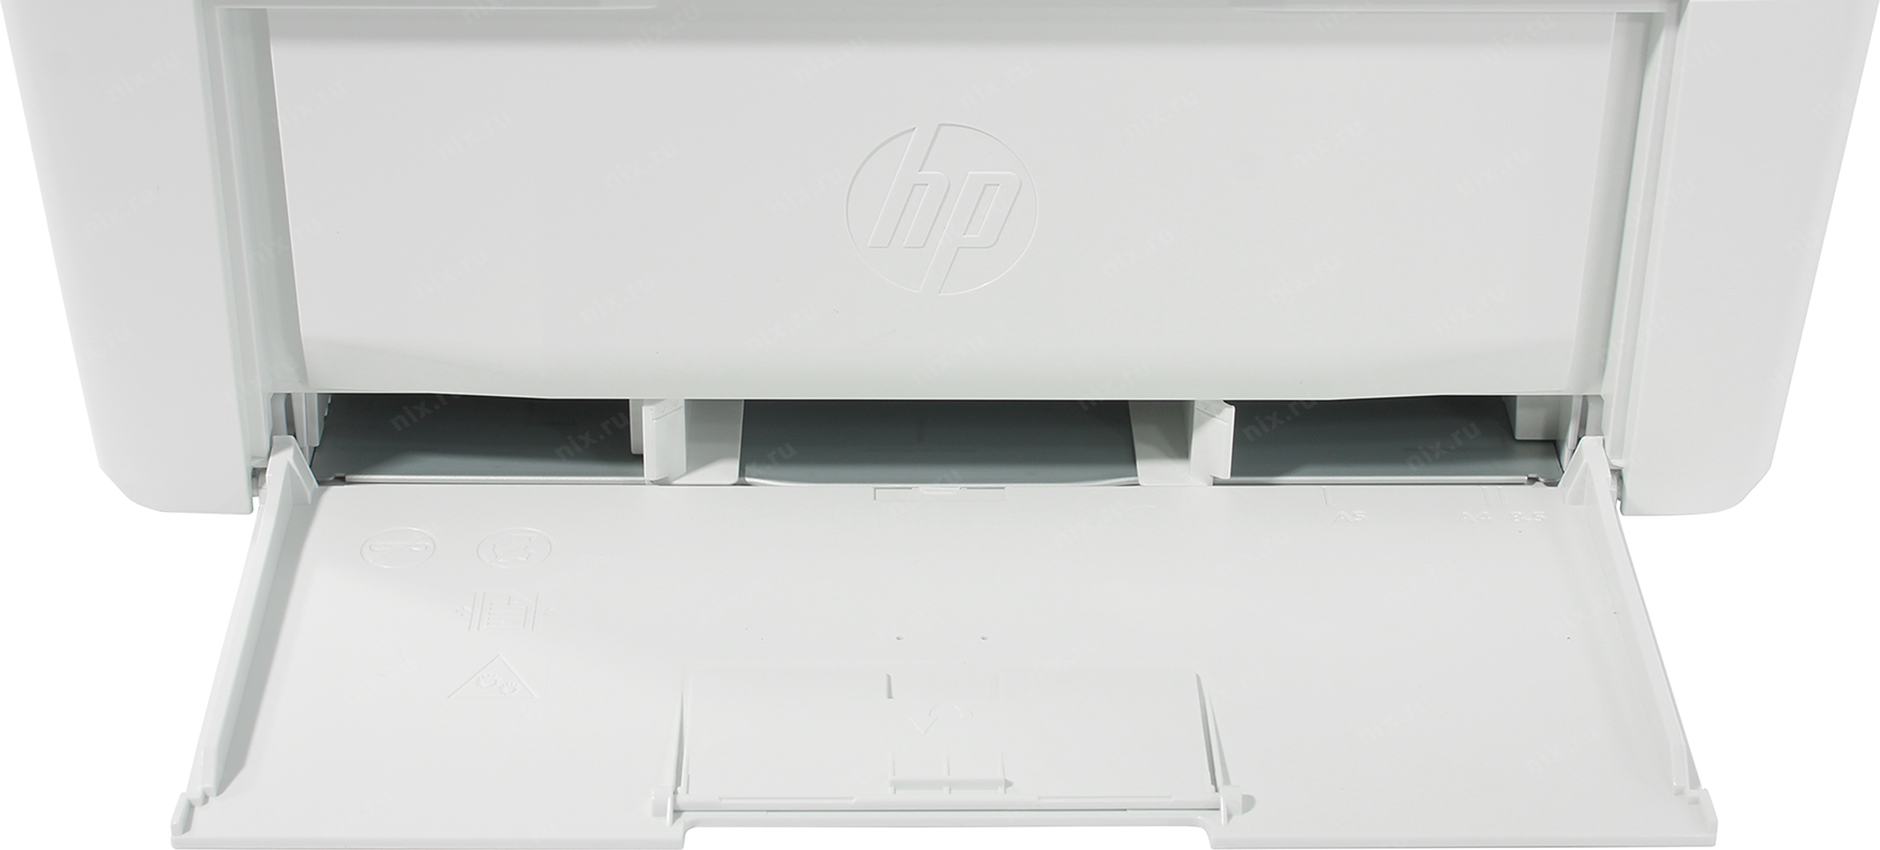 Imprimante Laser HP Multifonction M141w Wi-Fi